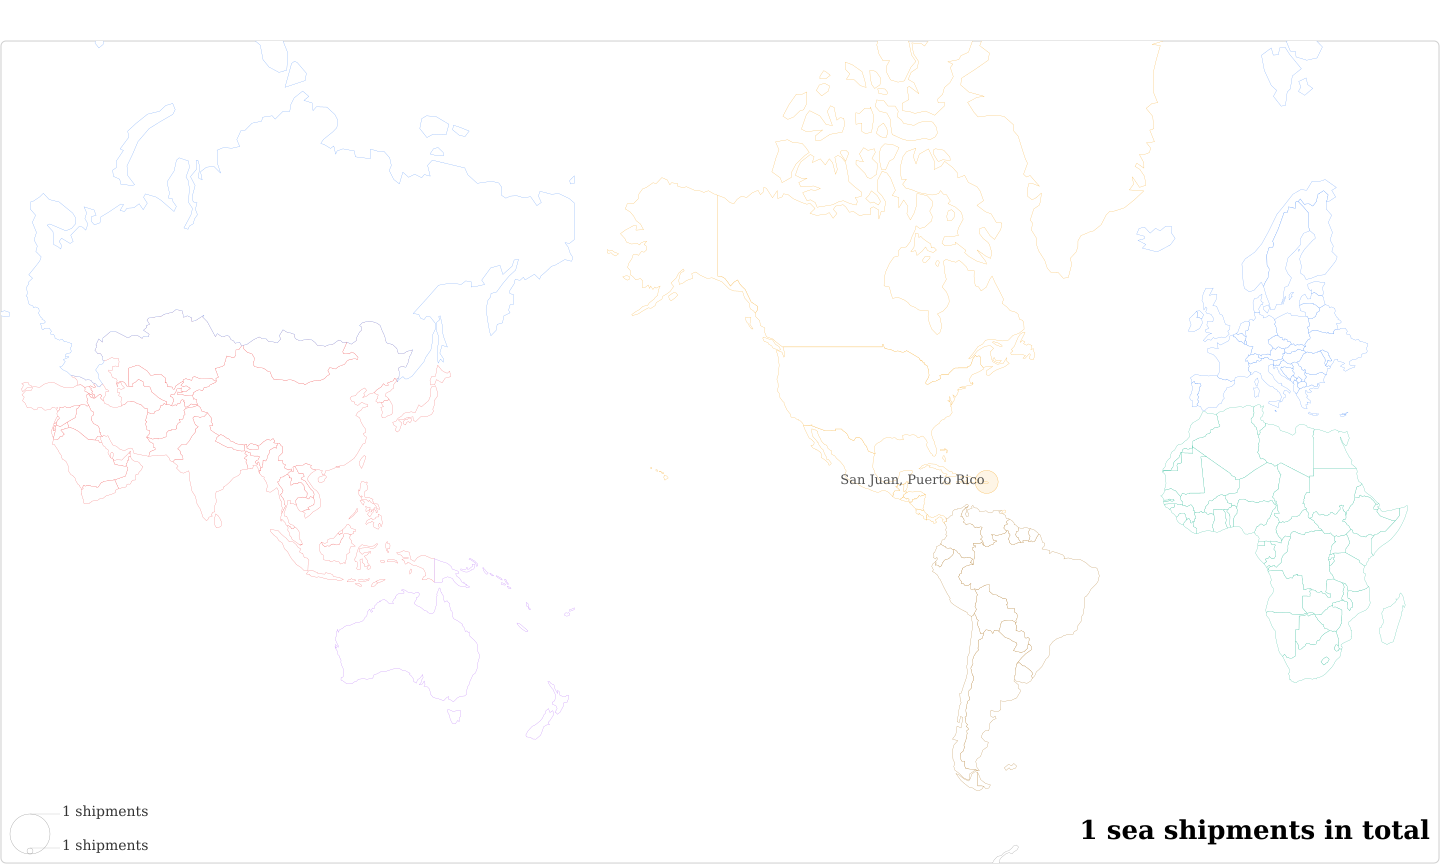 Alfredo Lopez Gonzalez's Imports Per Country Map